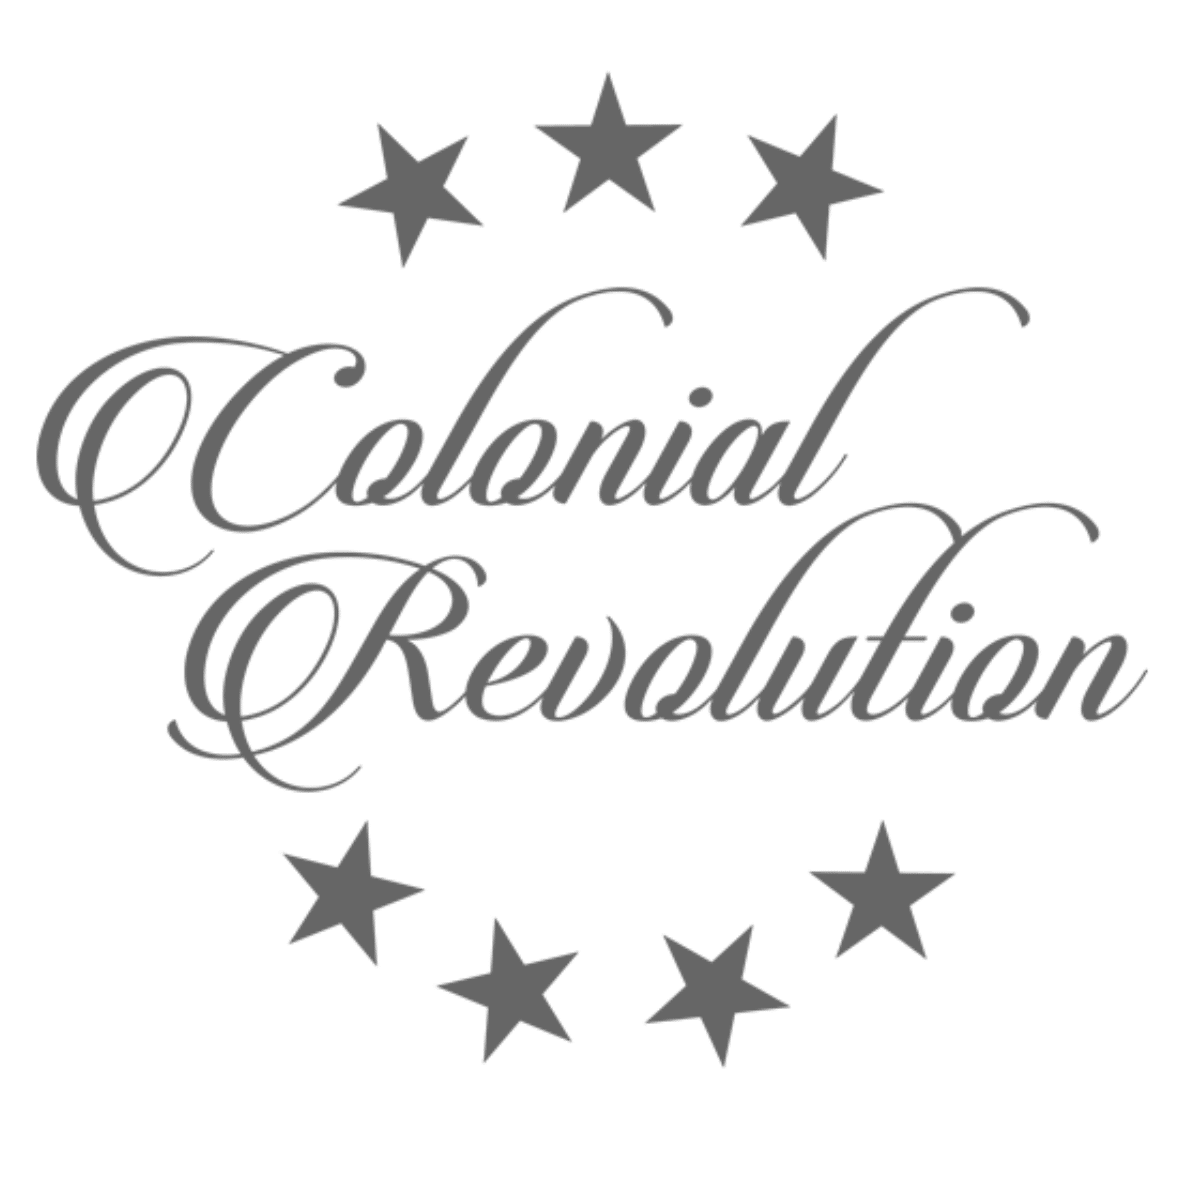 Colonial Revolution Logo